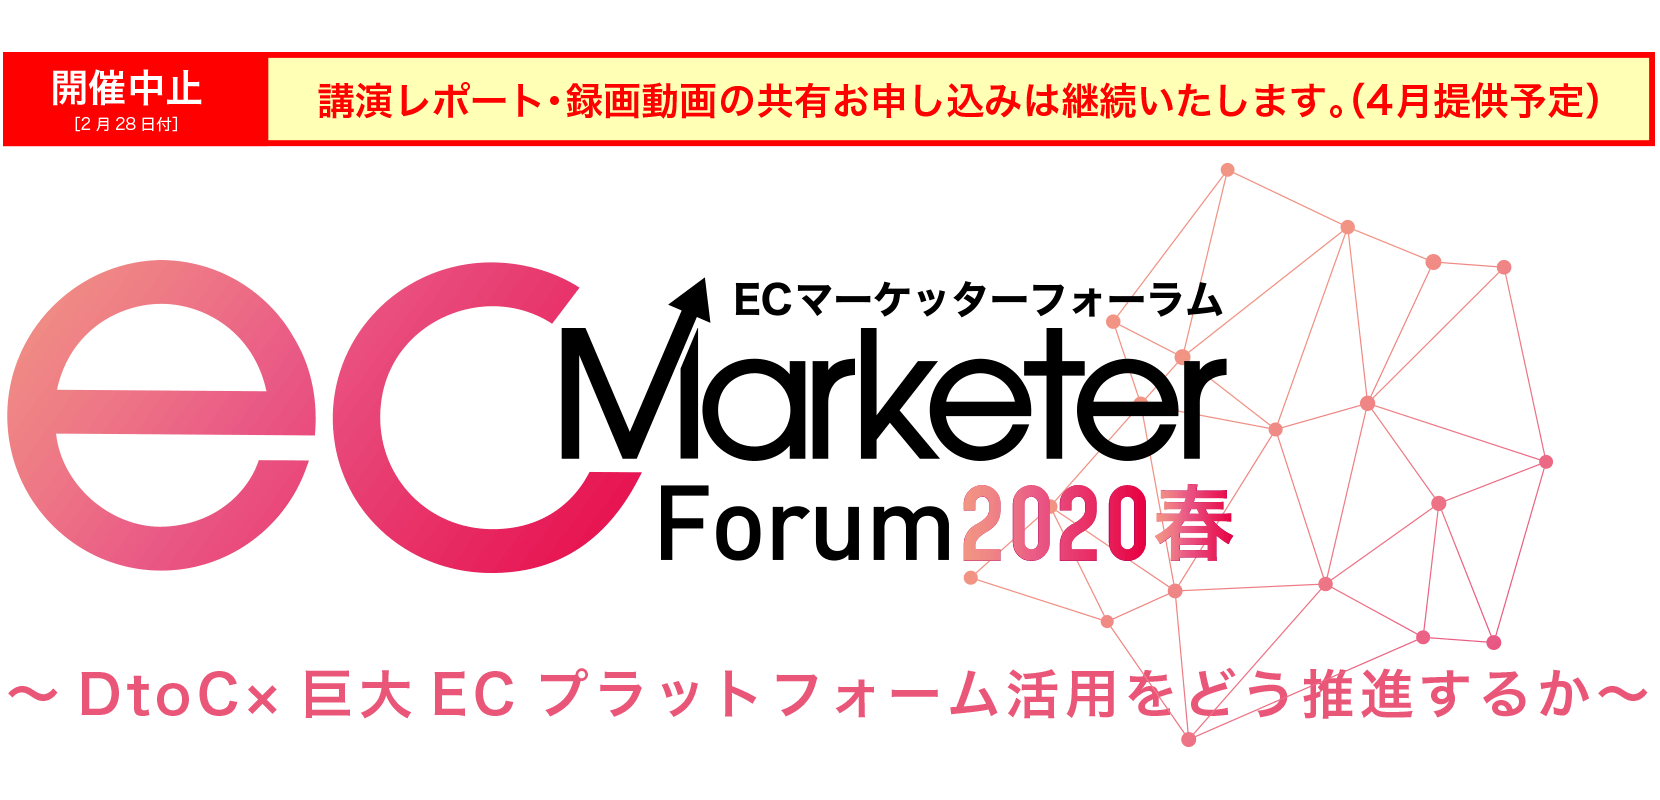 ecMarketerforum ECマーケッターフォーラム 2020春